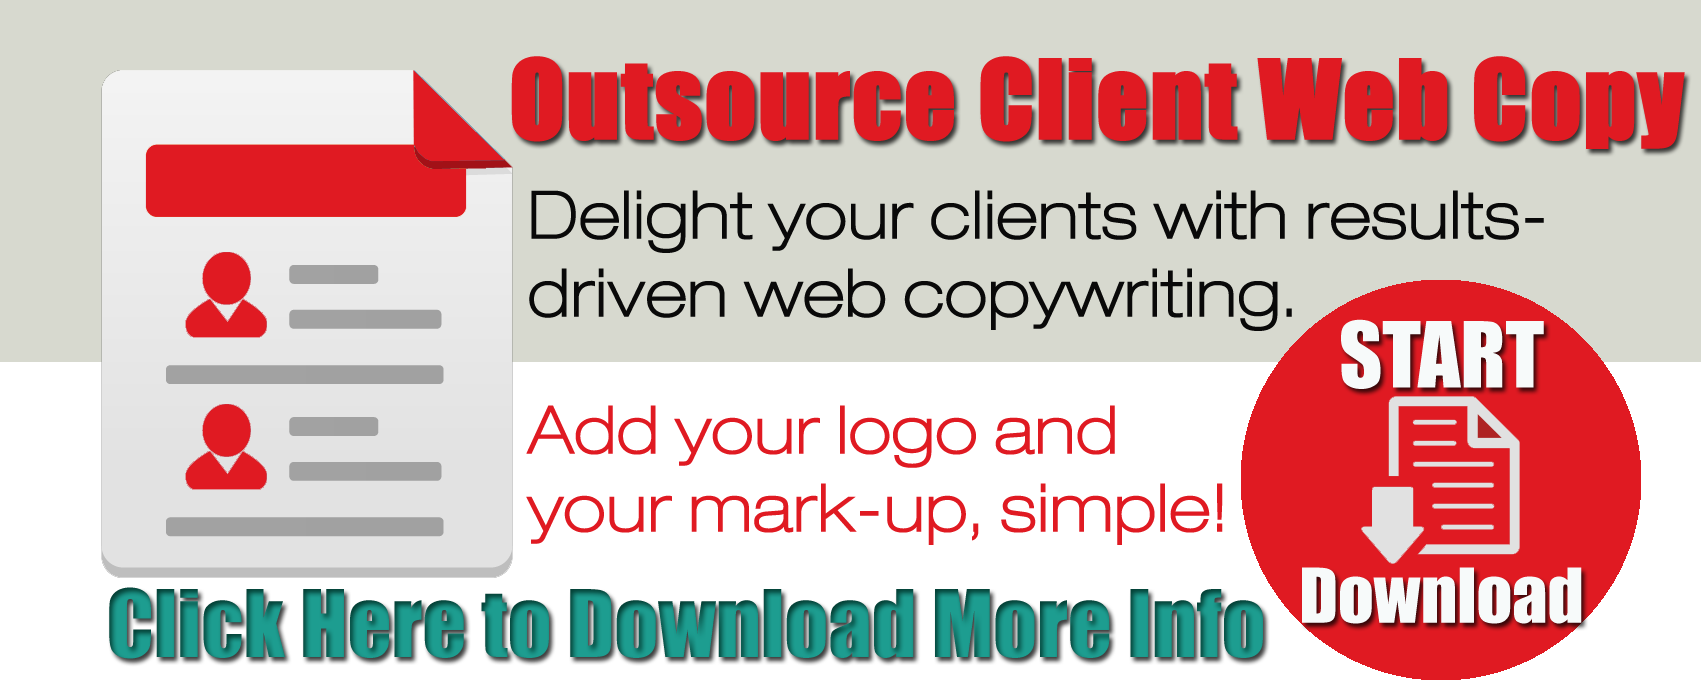 outsource web copy